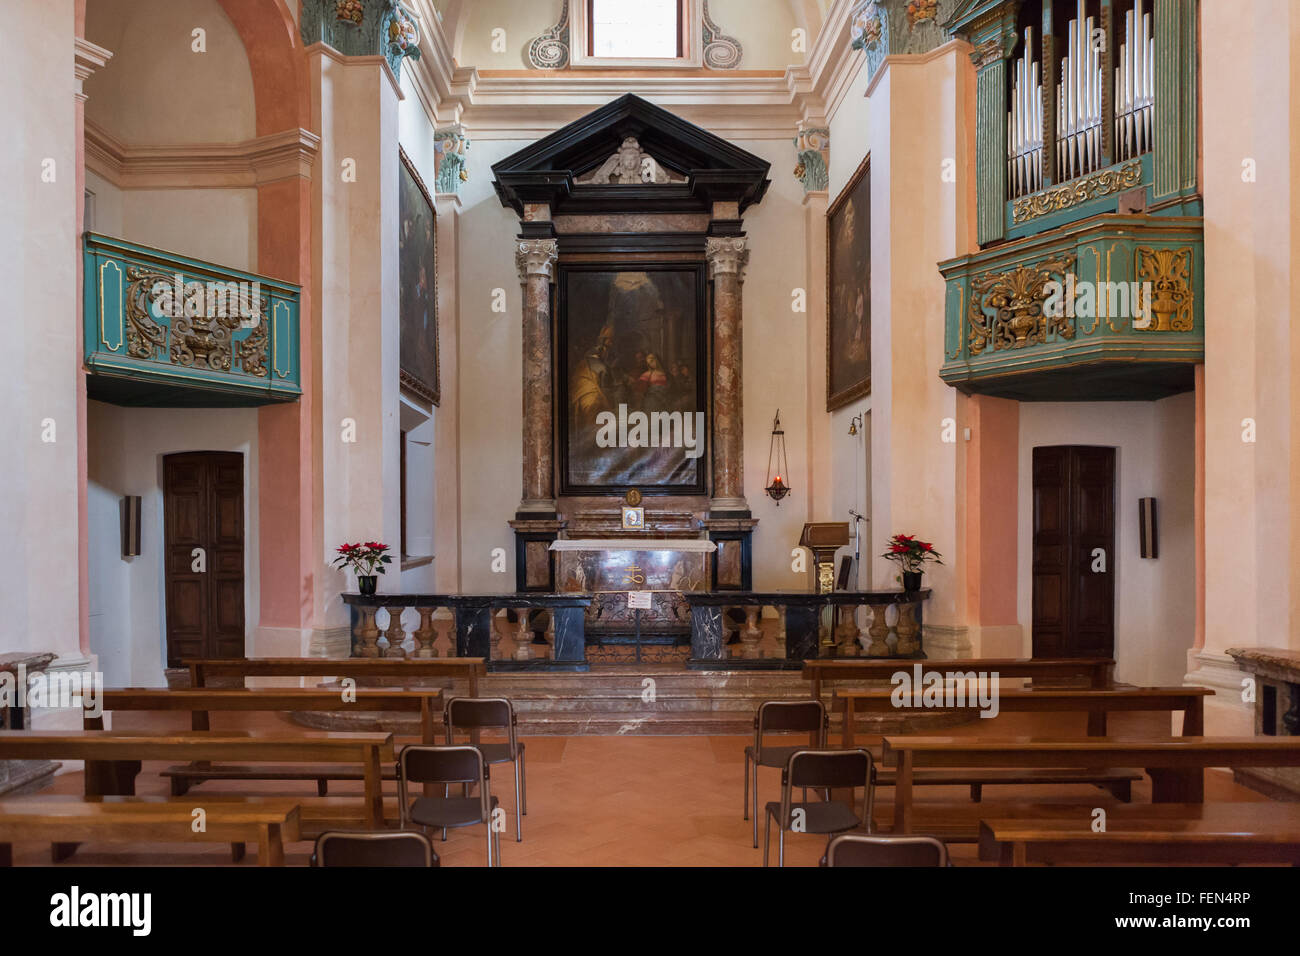 Oratorio dei Santi Giuseppe e Dionigi (Saints Joseph and Dyonisus Oratory). Luino, Italy. Stock Photo